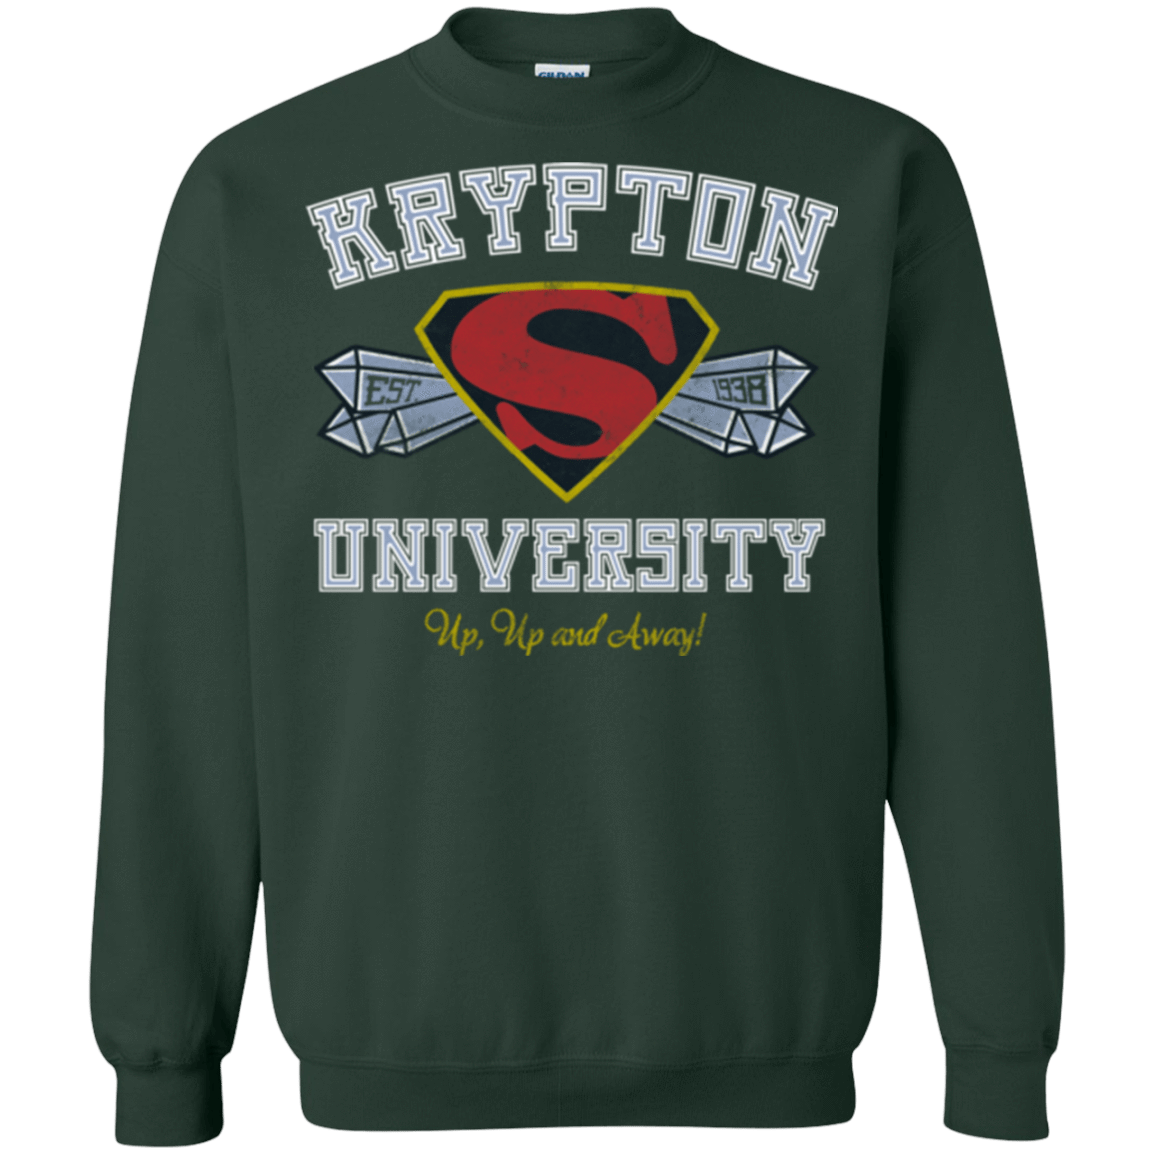 Sweatshirts Forest Green / Small Krypton University Crewneck Sweatshirt